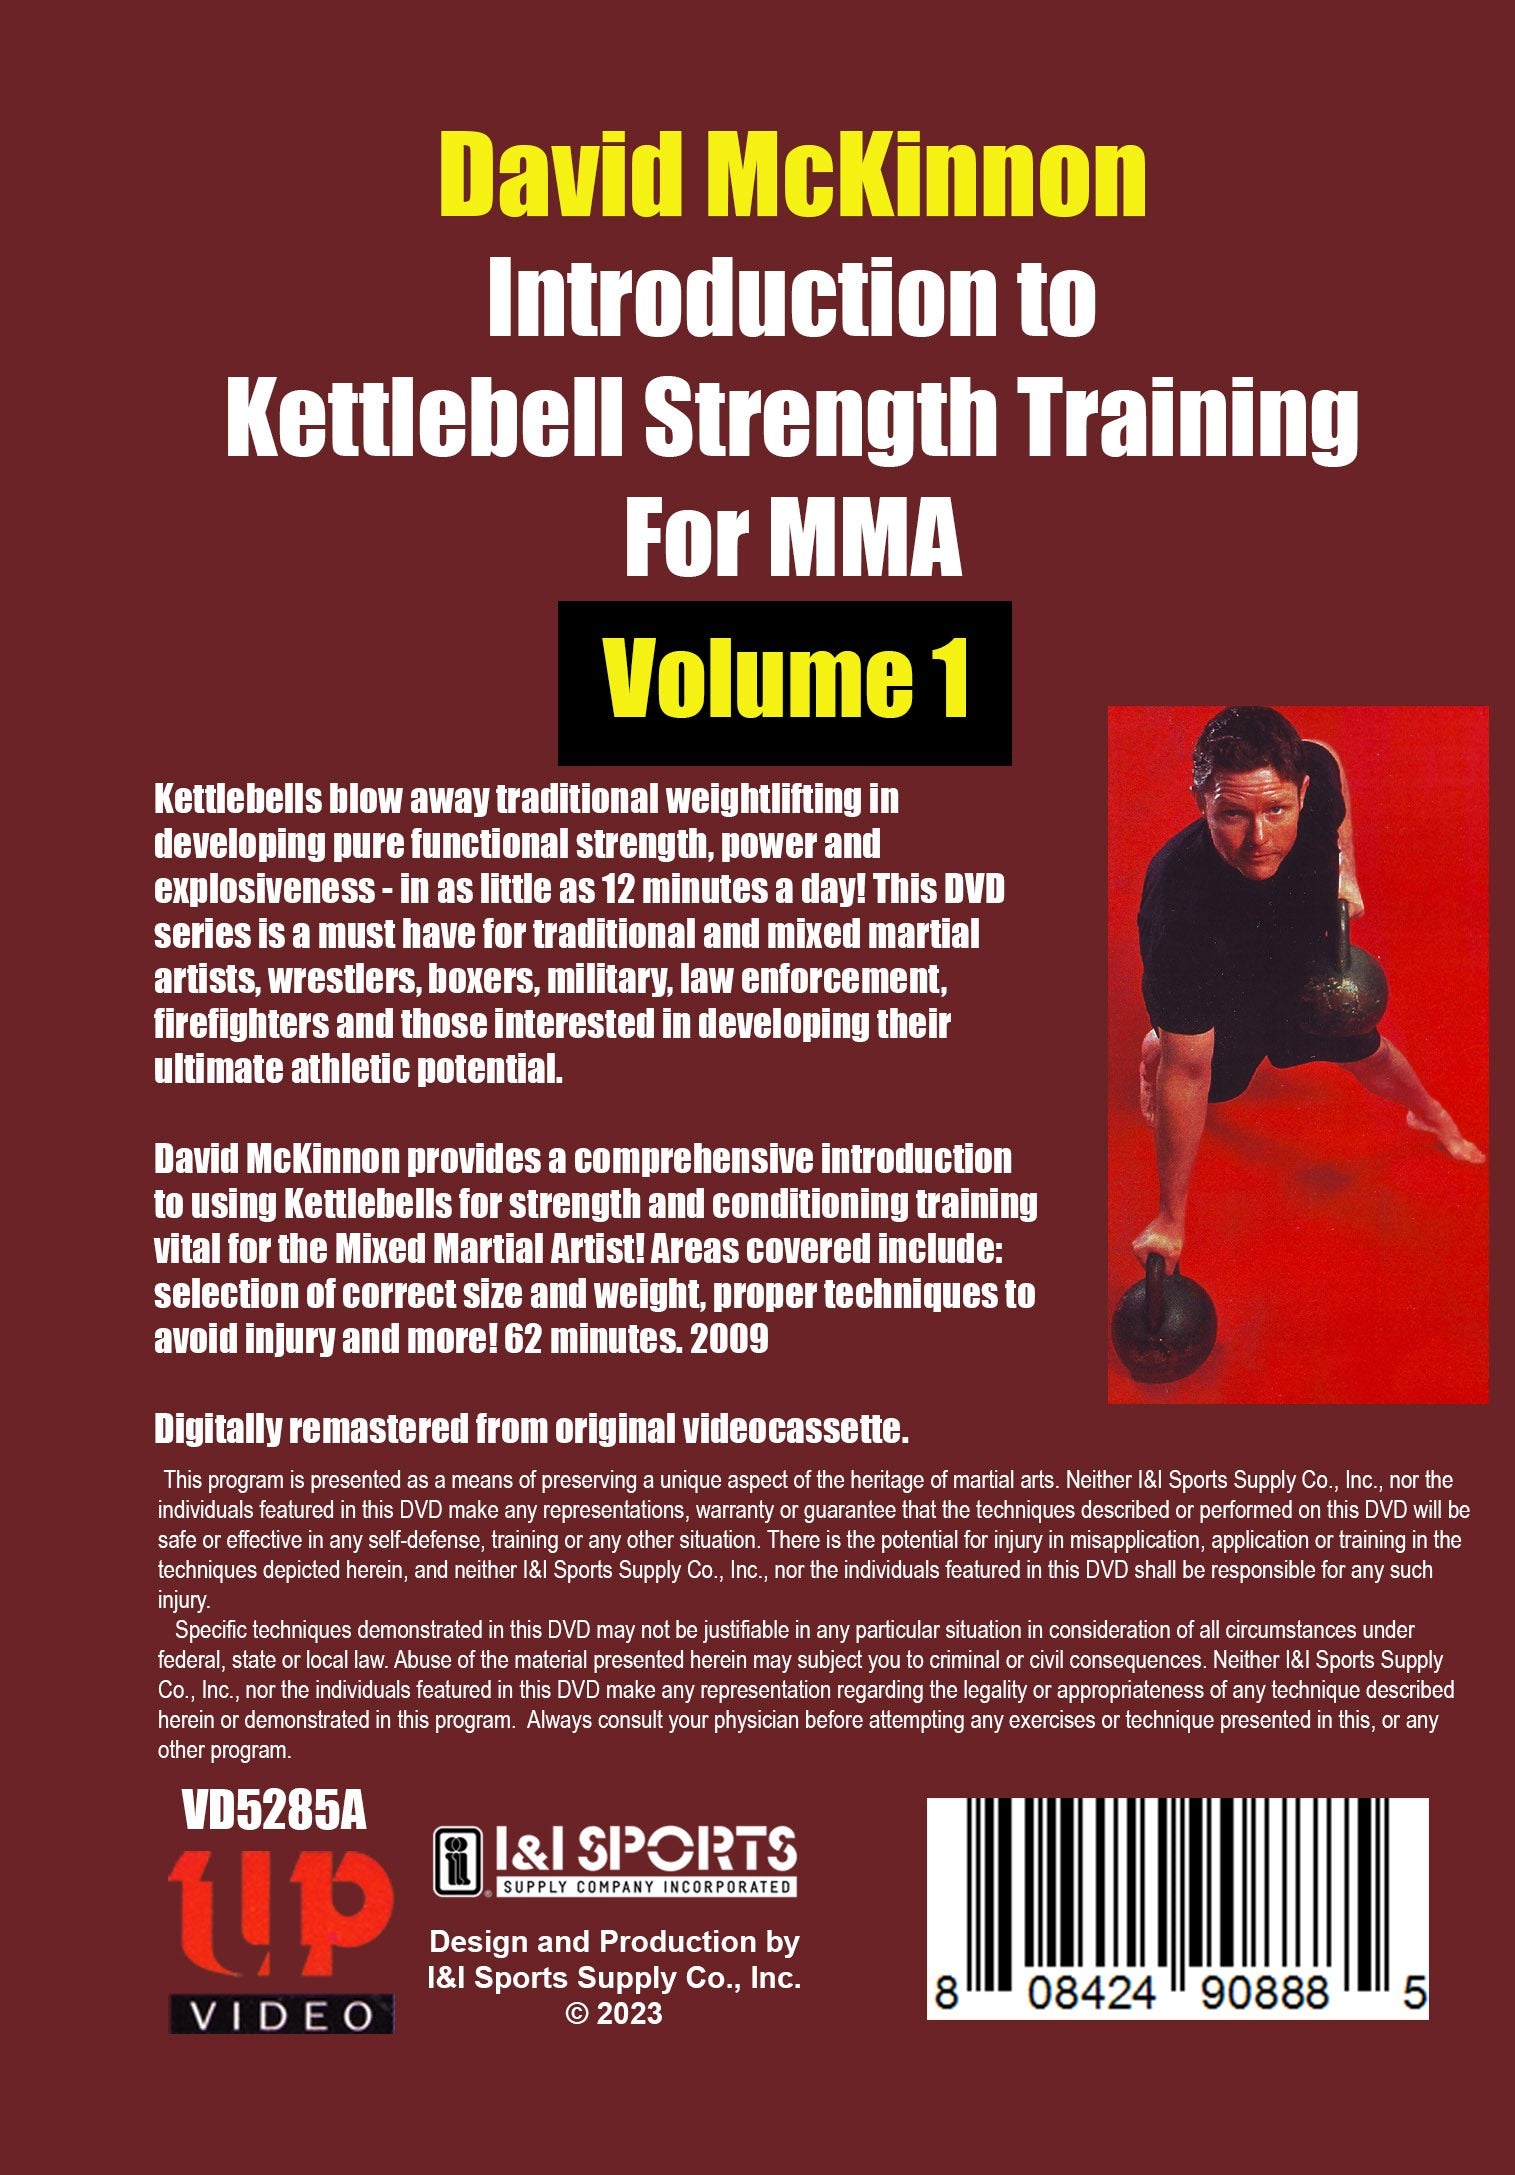 Introduction Kettlebell Strength Training For MMA #1 DVD David McKinnon bjj